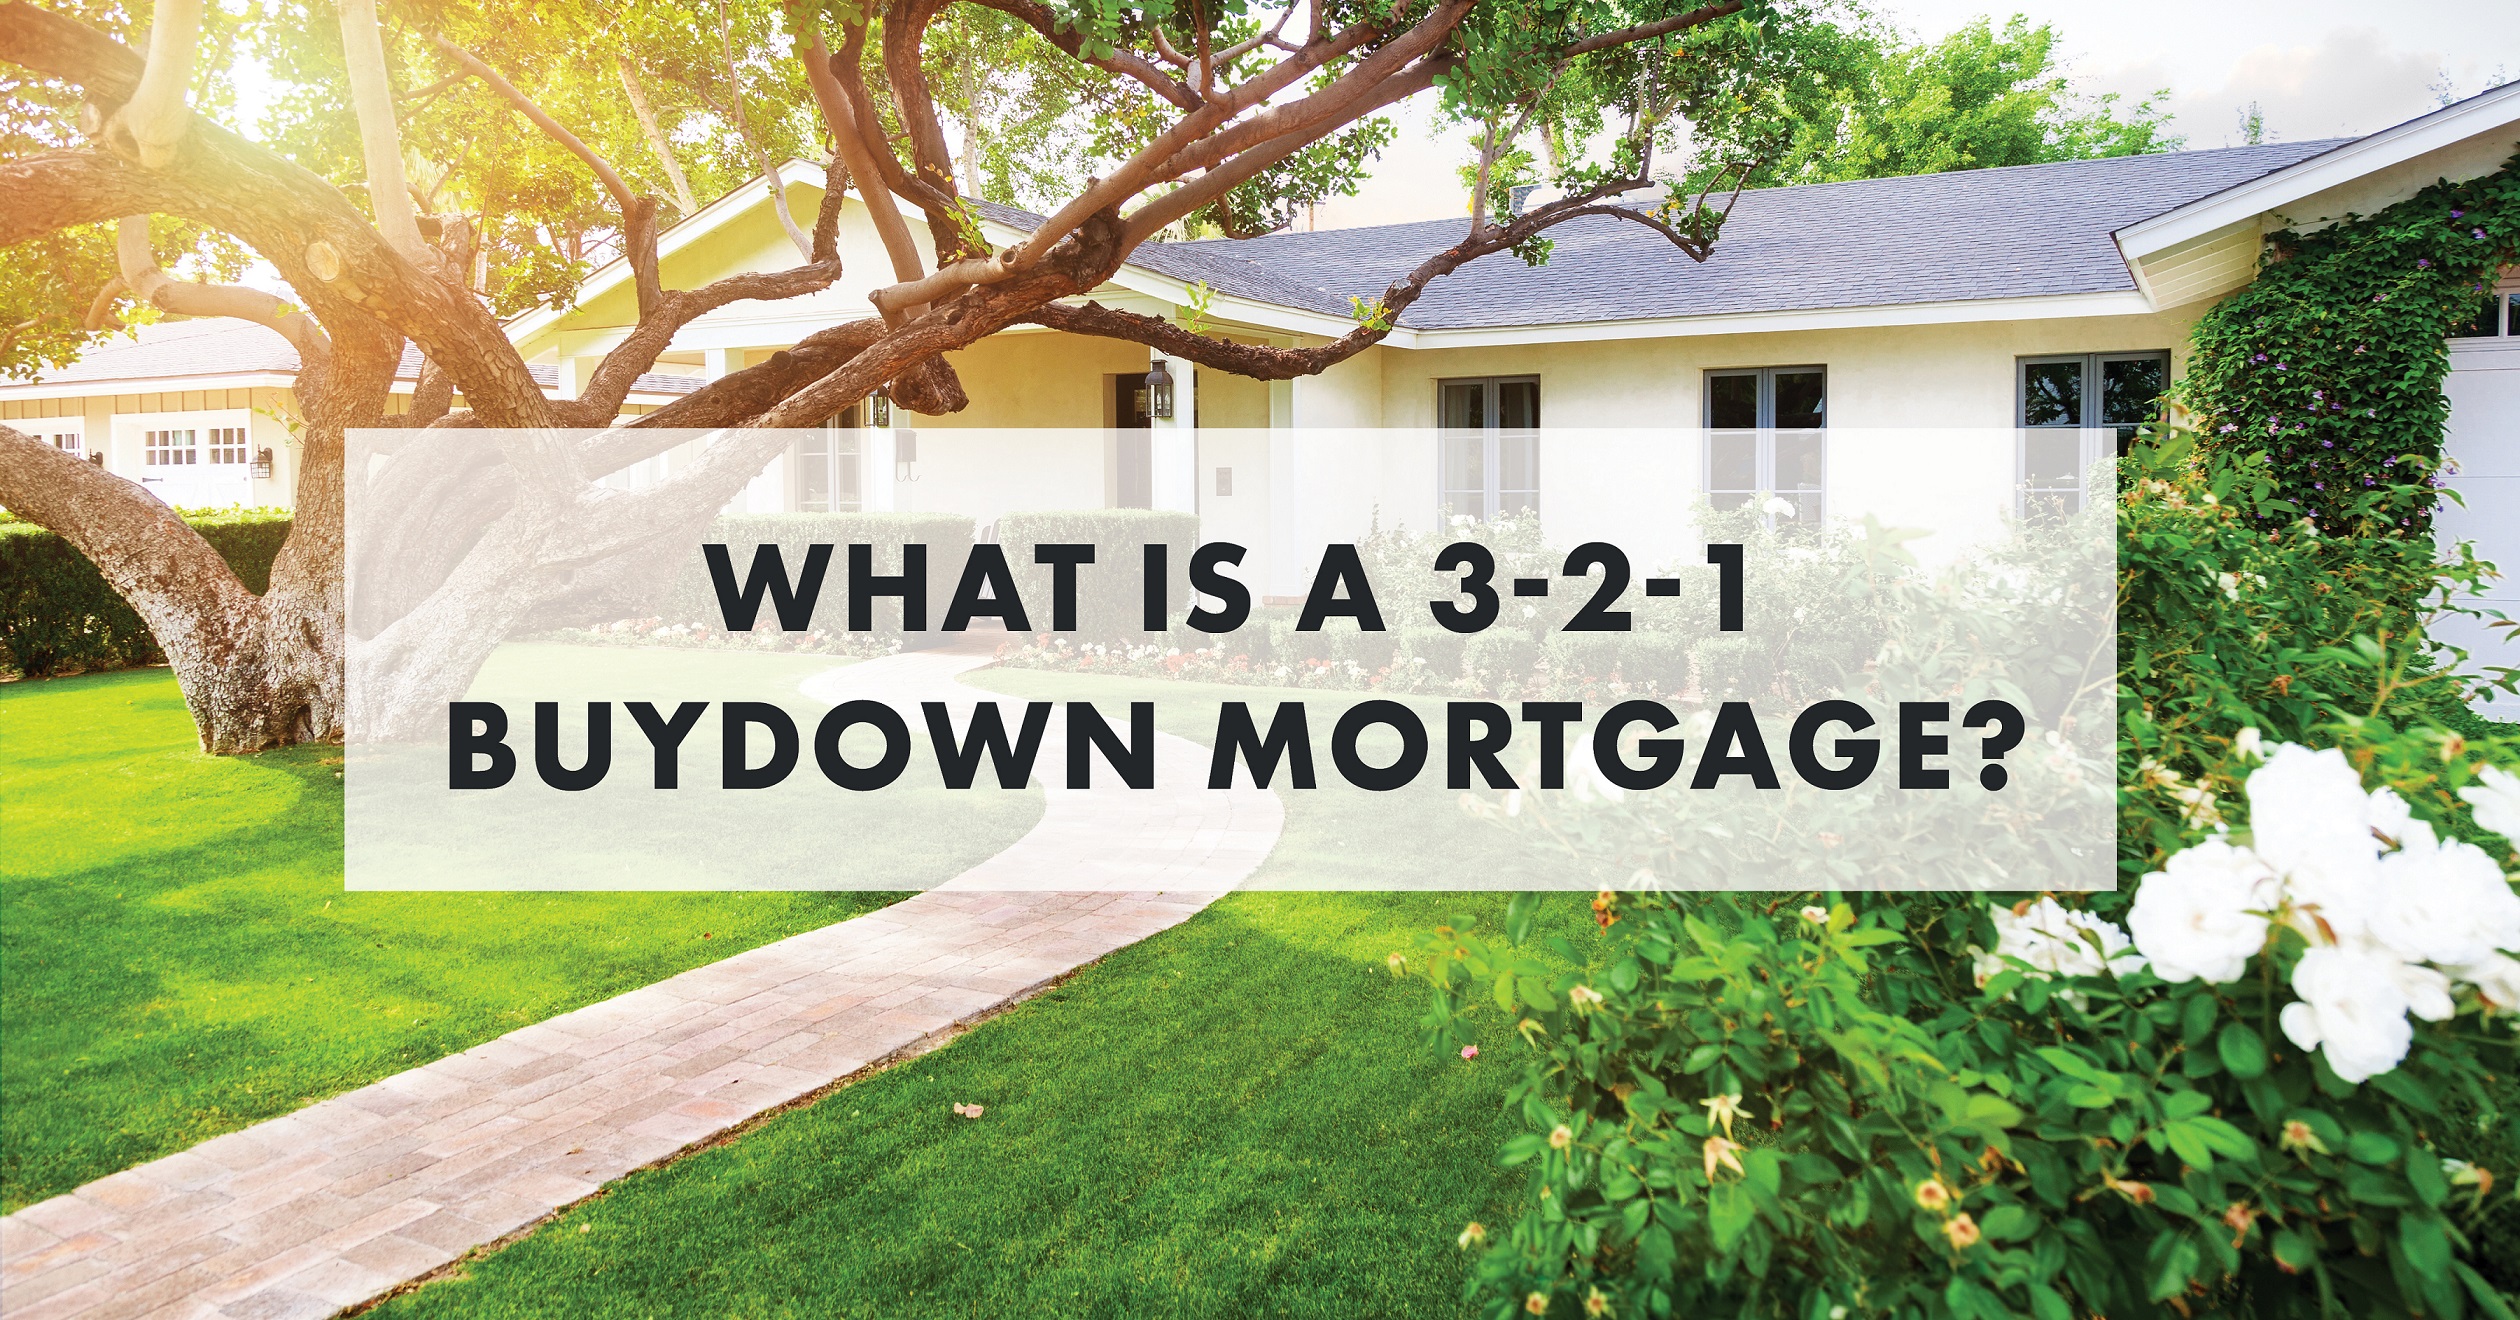 3-2-1 Buydown Mortgage